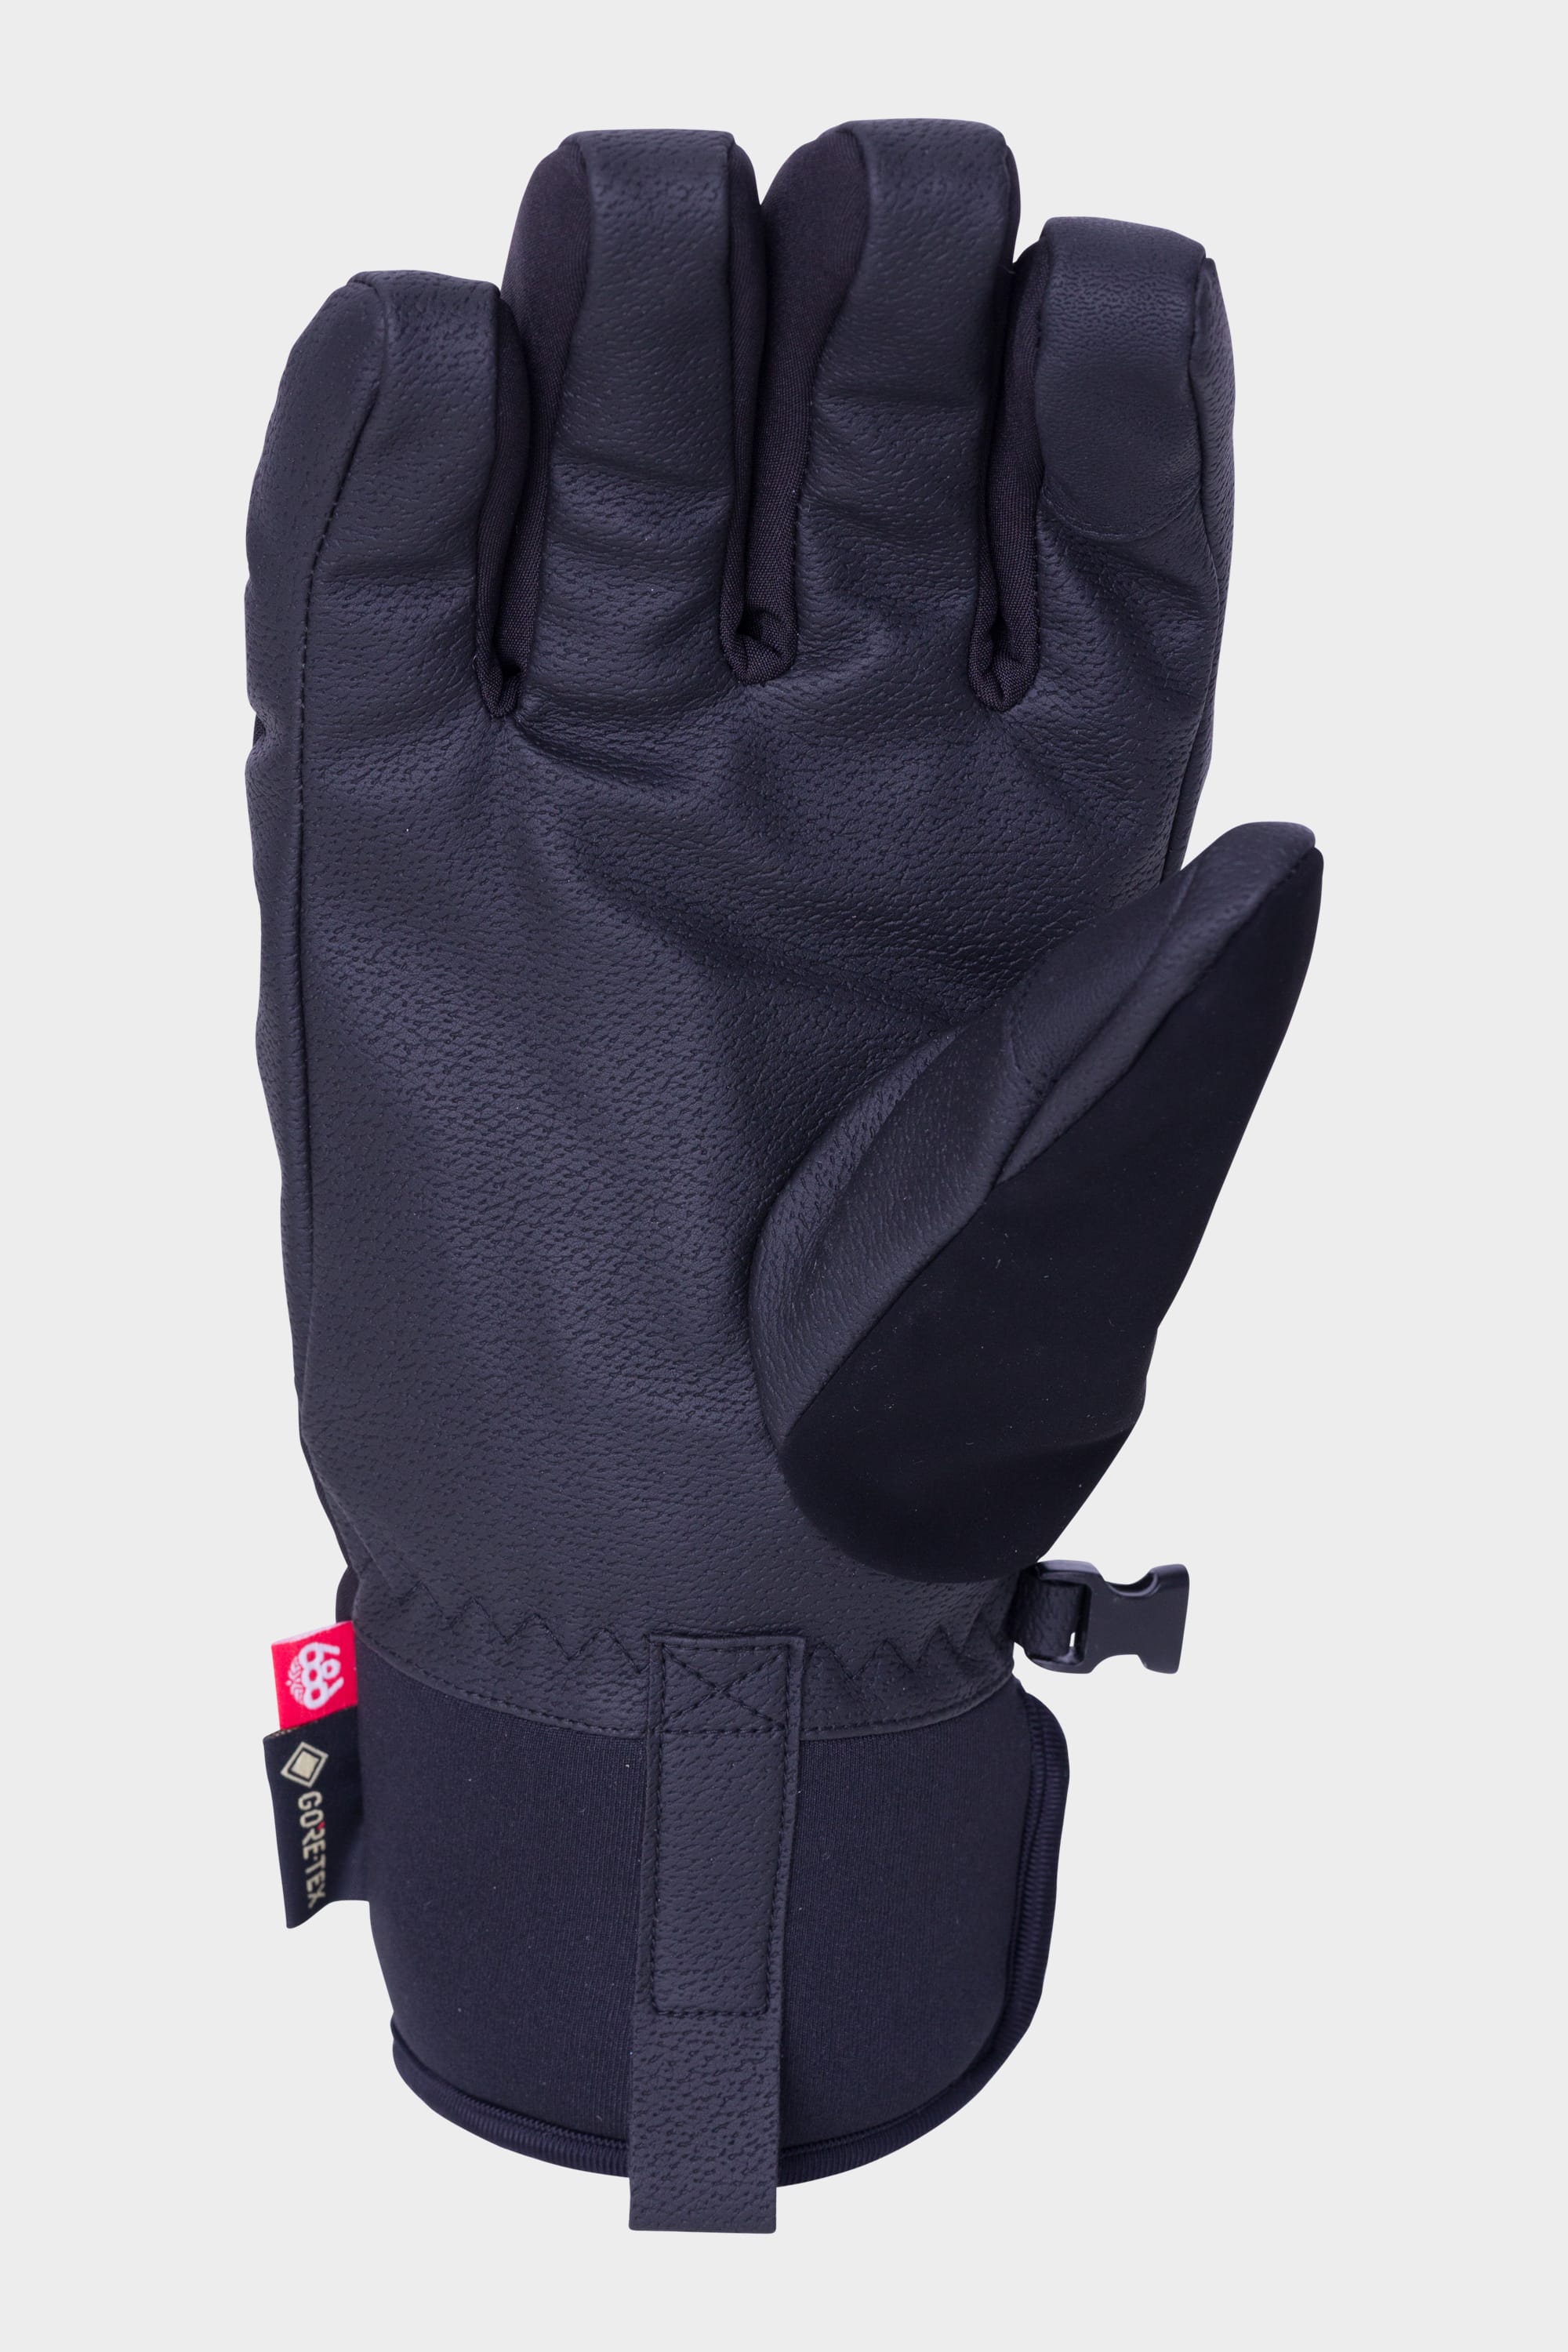 686 Mns Gore-Tex Linear Glove, Guantes snowboard